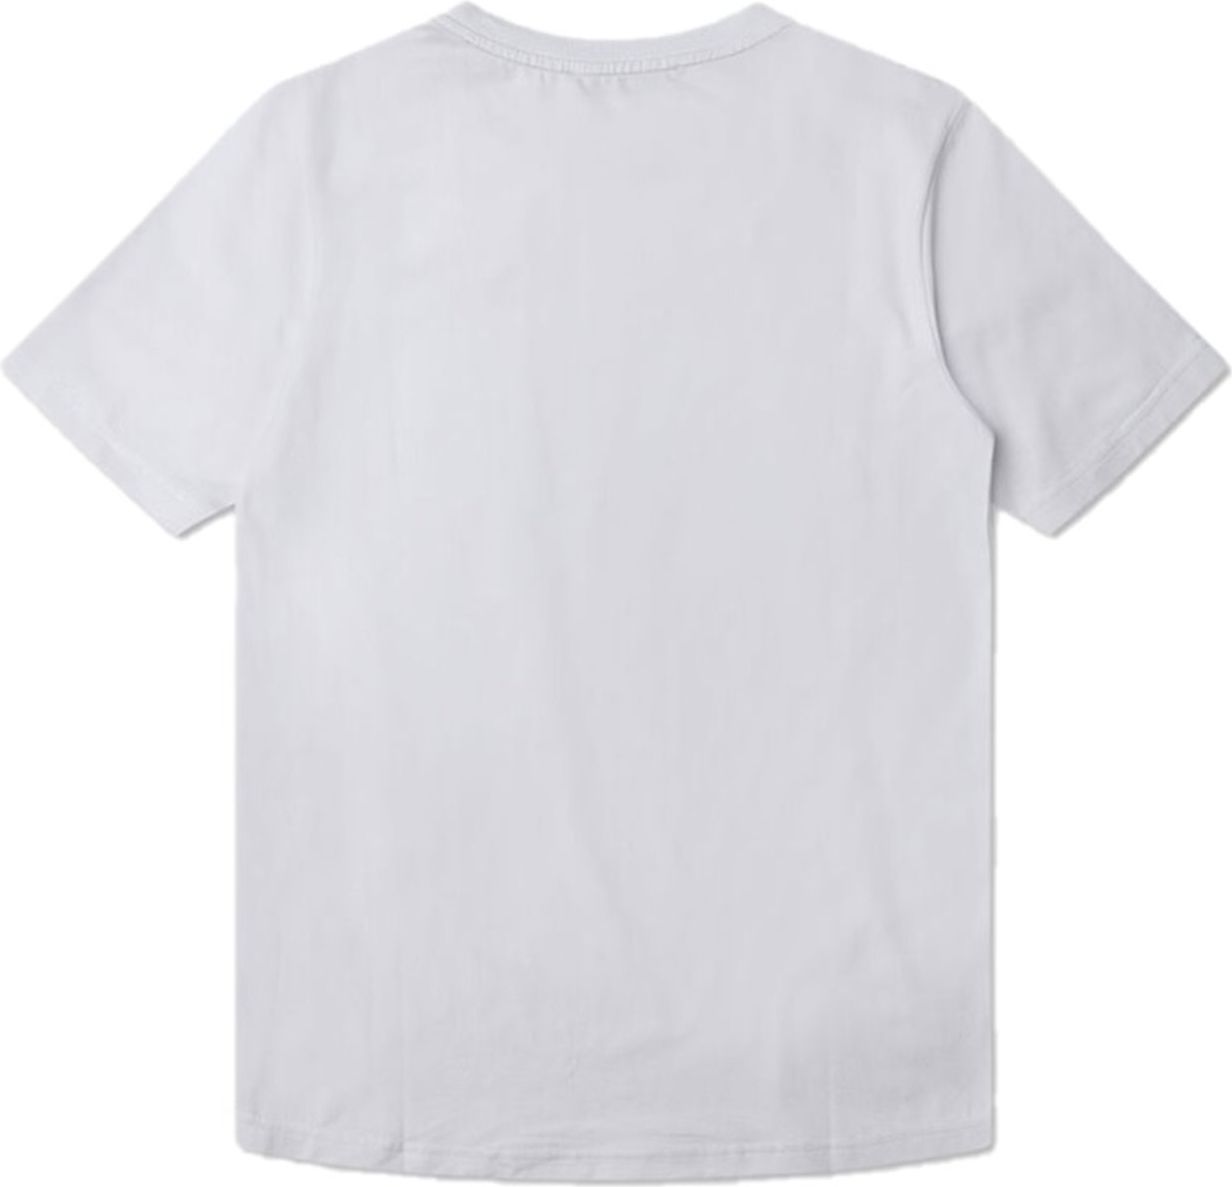 OFF THE PITCH Stockholm Neckprint T-Shirt Blanc De Blanc Wit